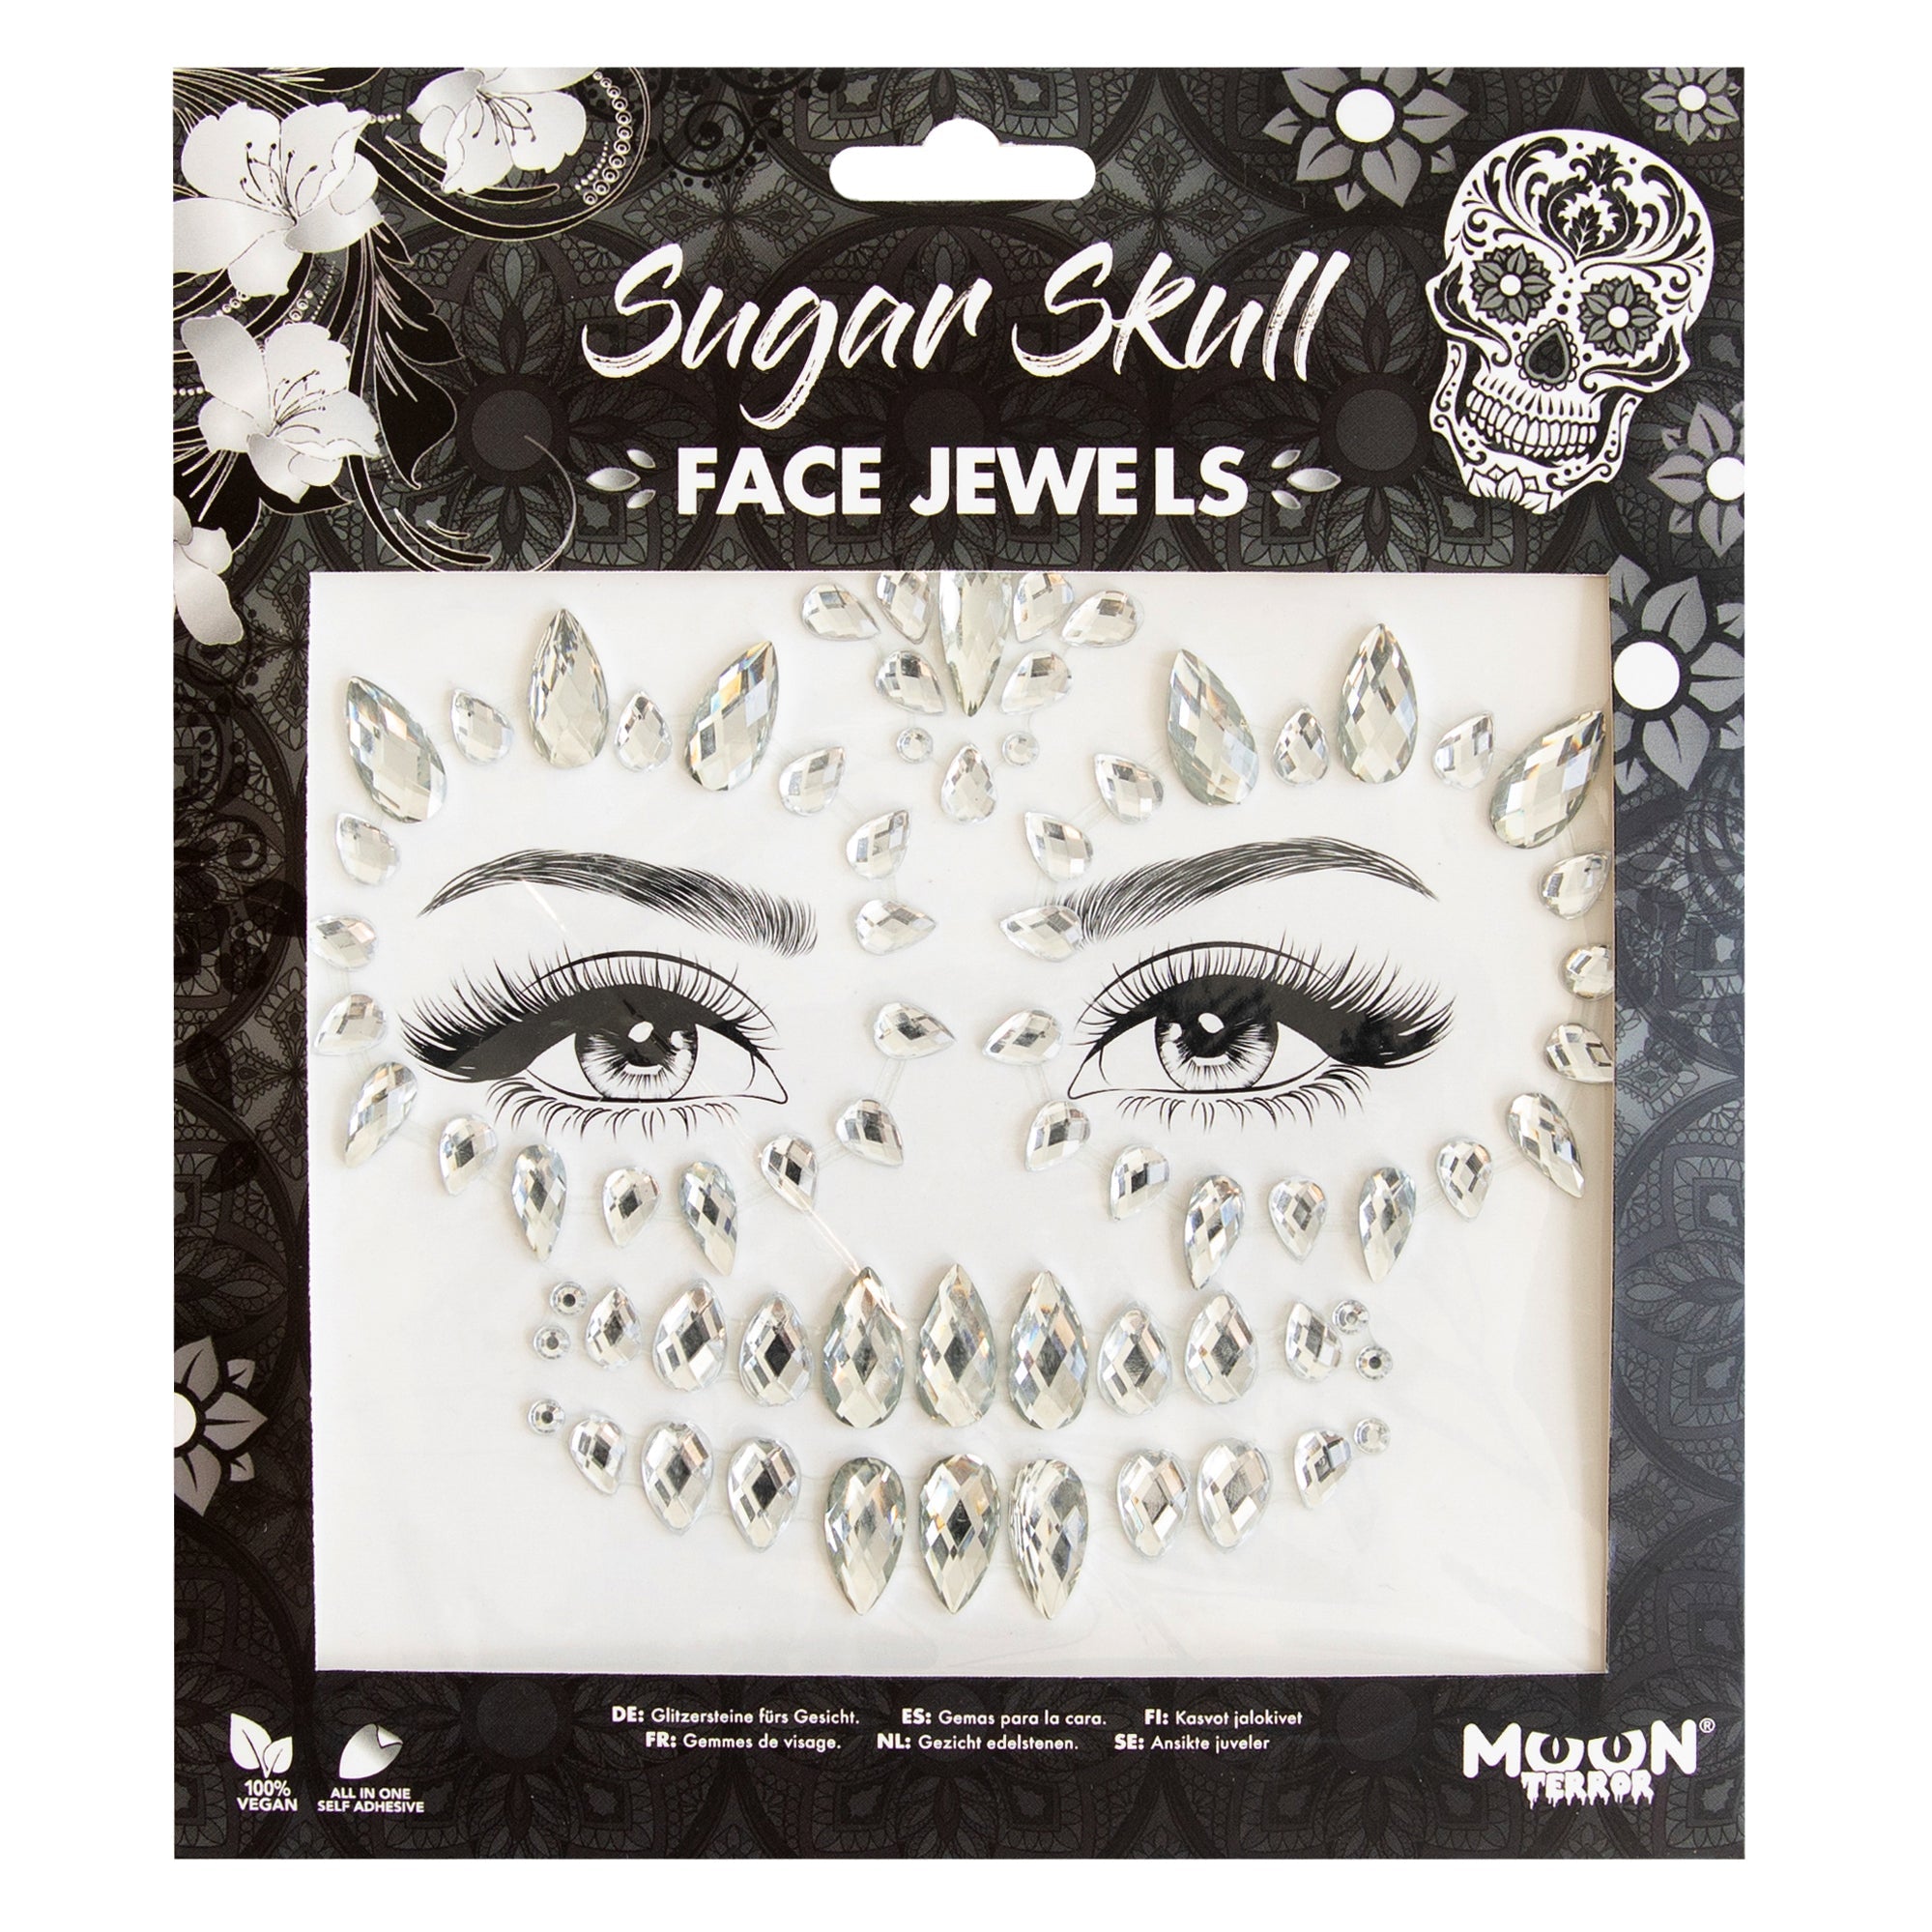 Sugar Skull - Terror Adhesive Face Gems, Jewels and Rhinestones